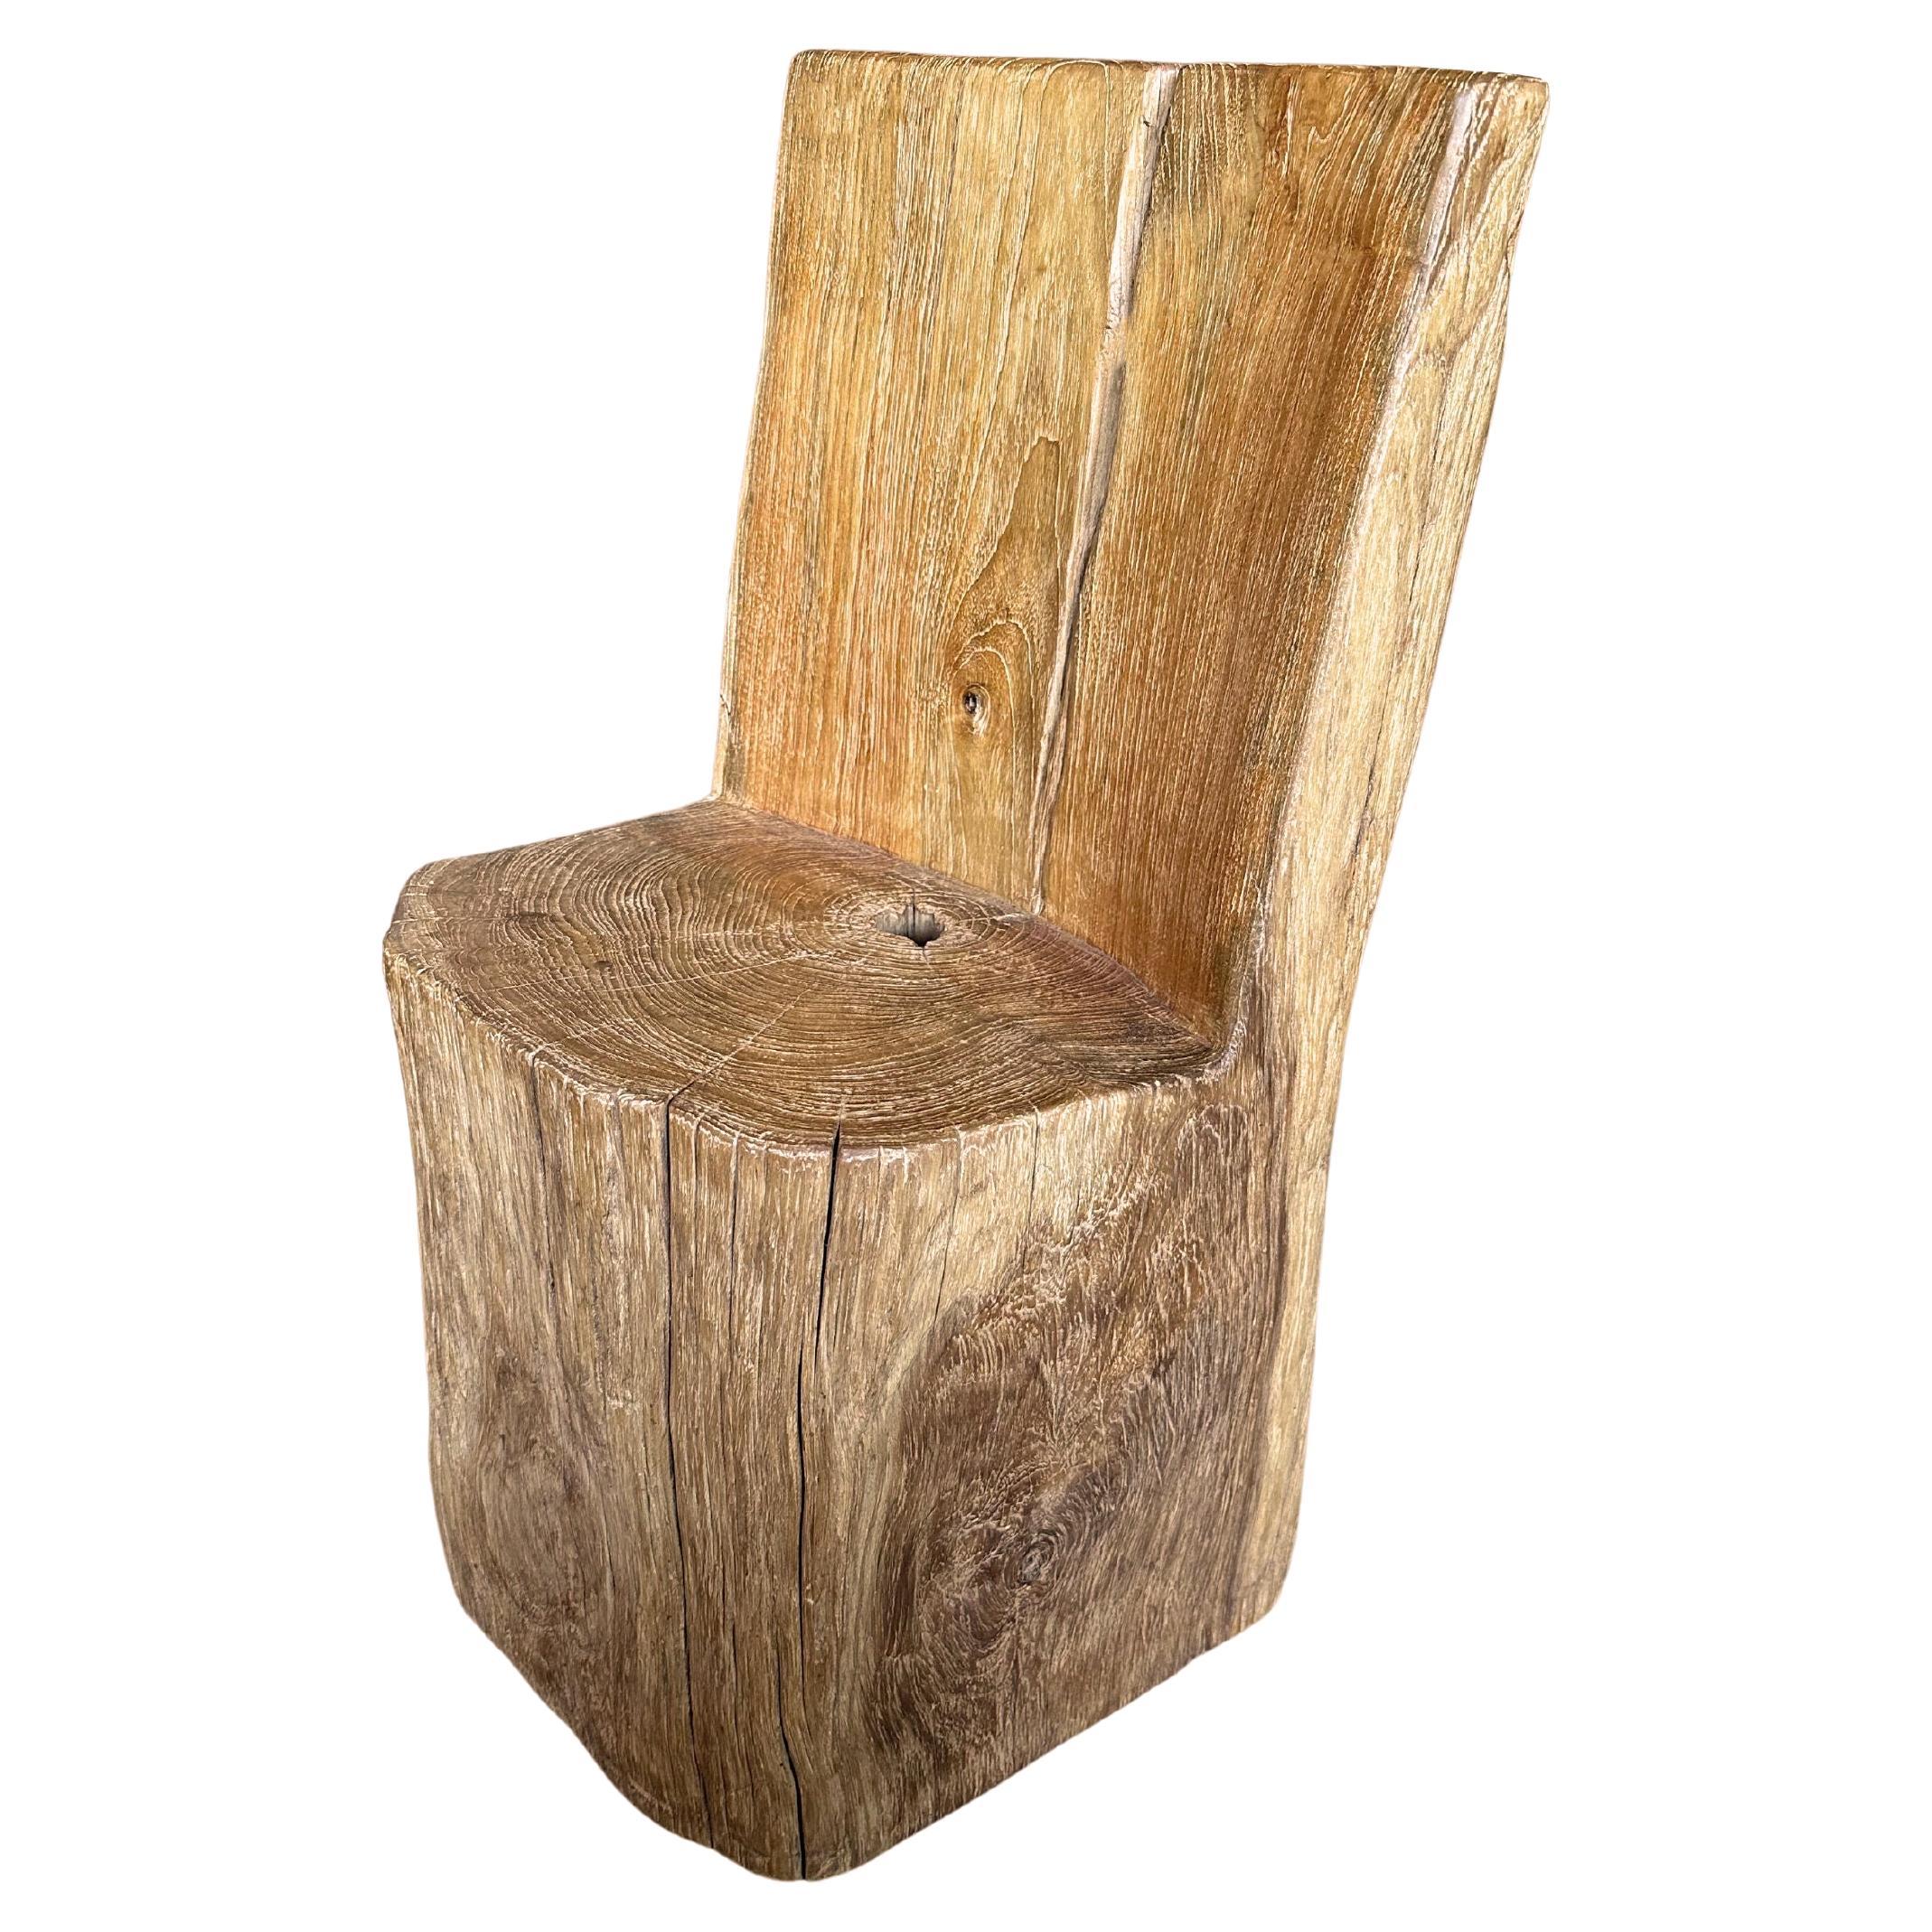 Sculptural Soild Teak Wood Chair For Sale